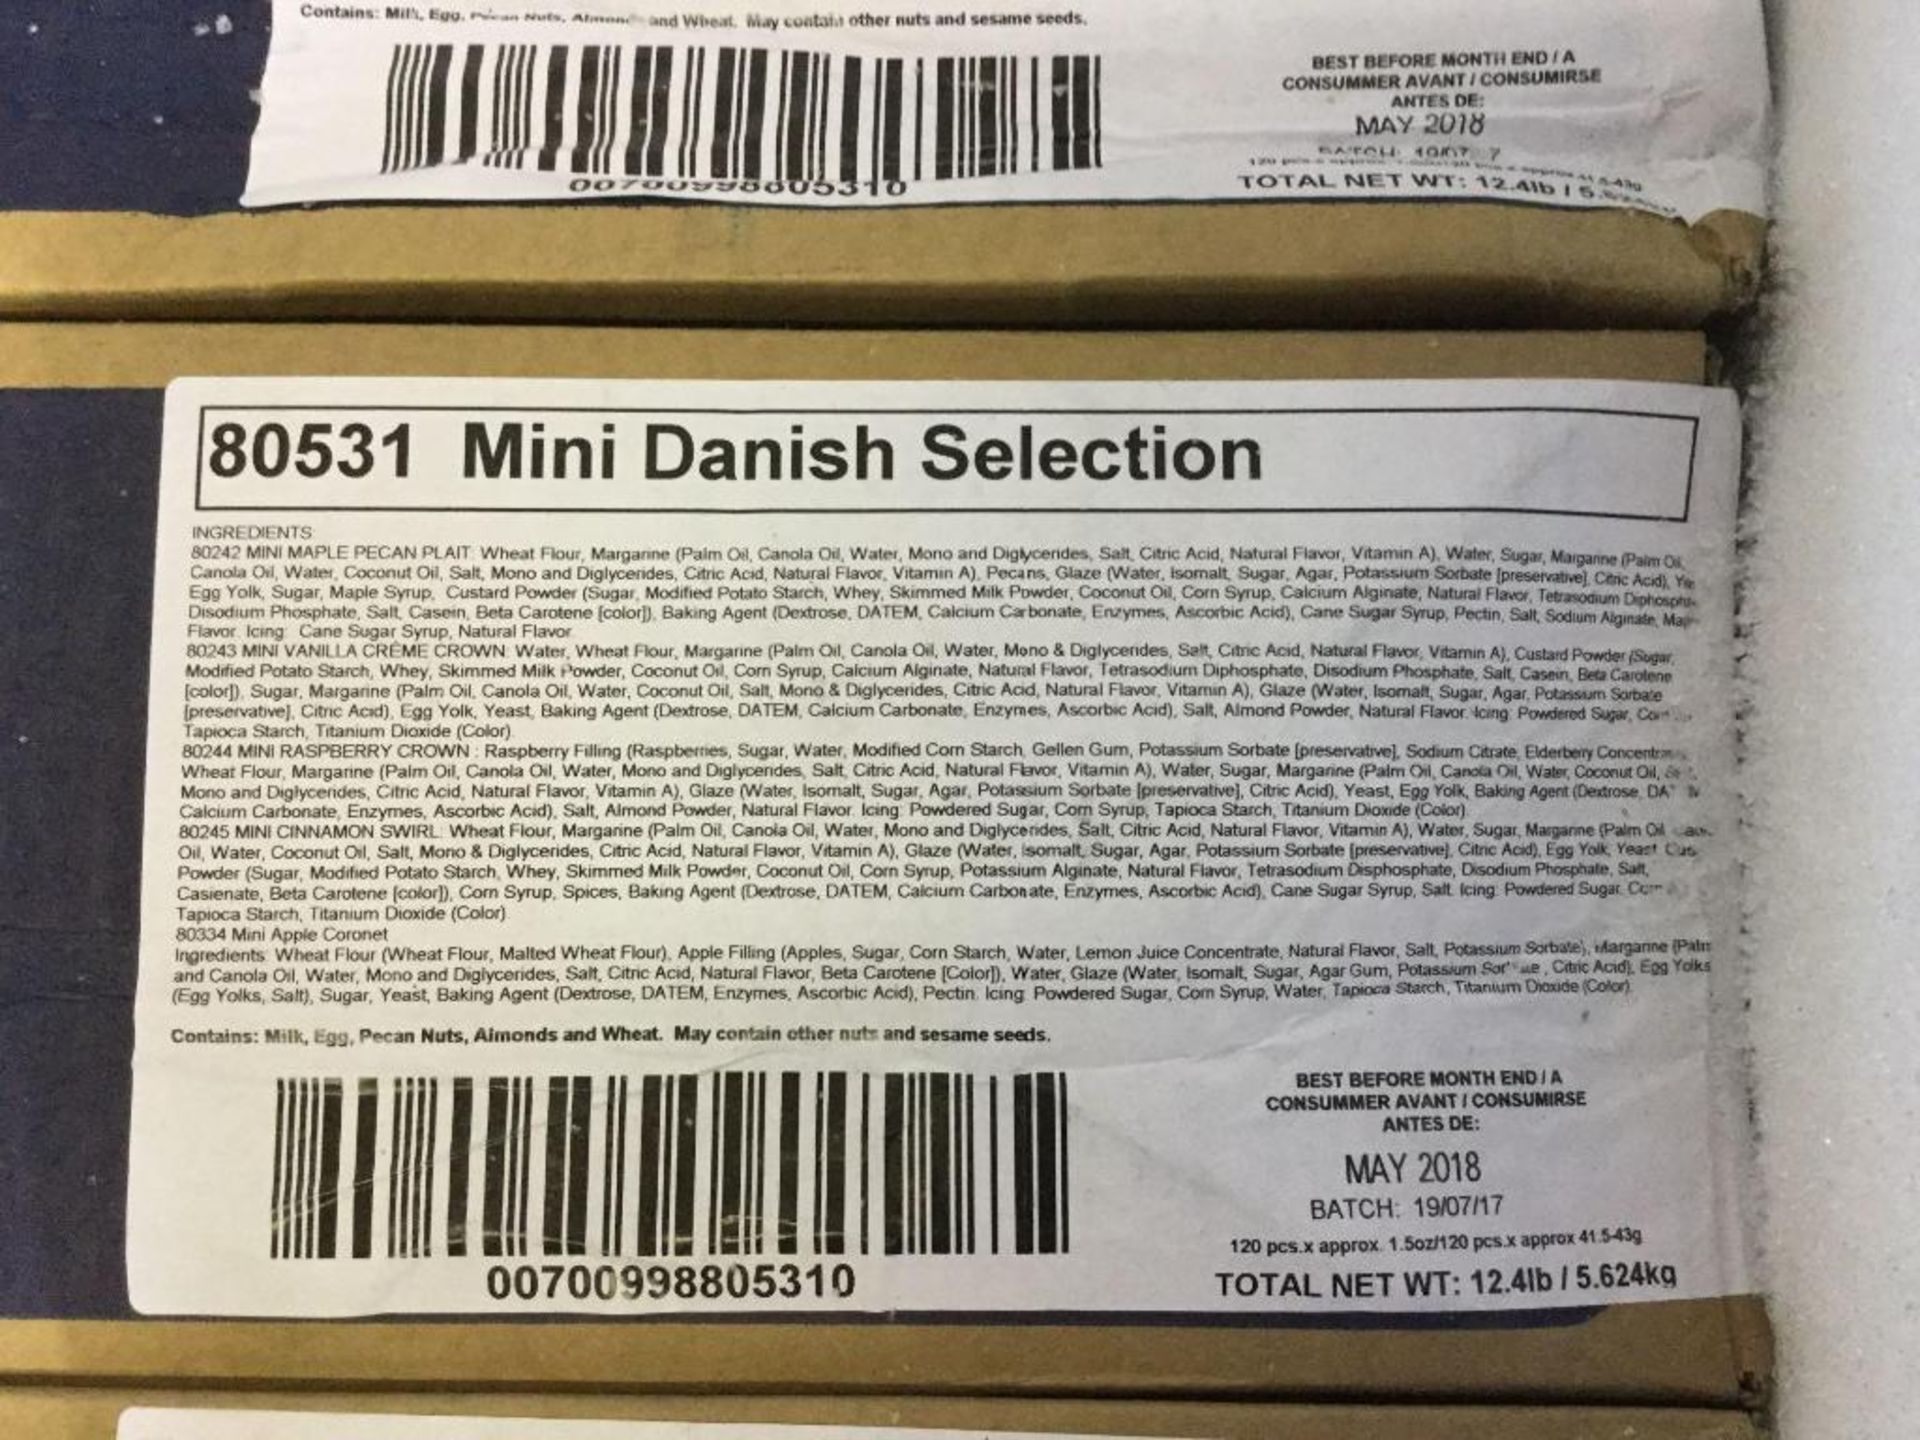 Case of 5.62 kg Frozen Mini Danish Selection - Image 2 of 2